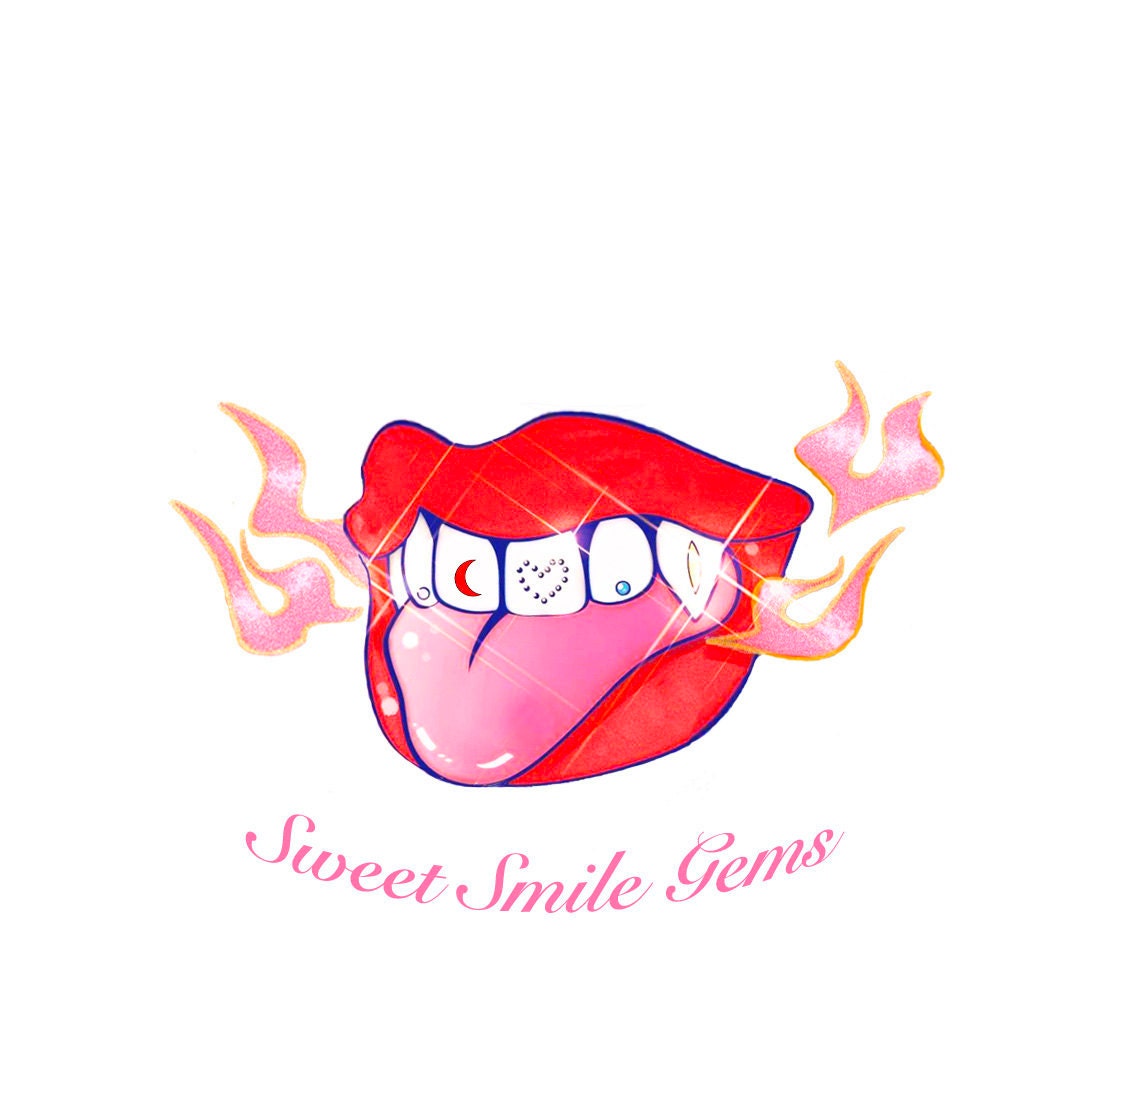 Professional DIY Tooth Gem Kit | Tooth Gem Starter Kit | Sweet Smile Gems |  Made in Los Angeles, California